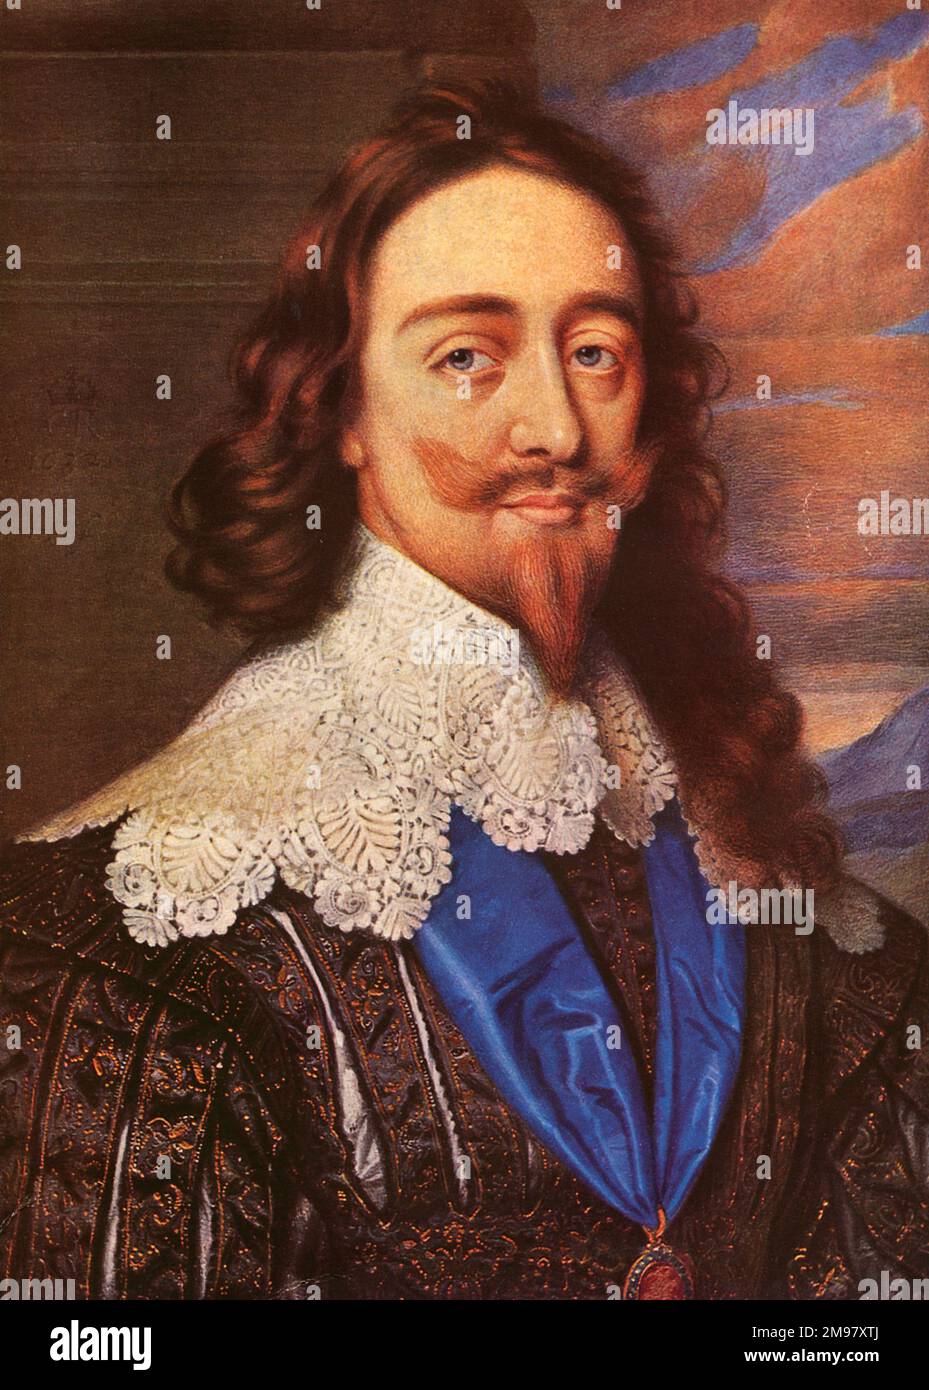 King Charles I (1600-1649, reigned 1625-1649). Stock Photo